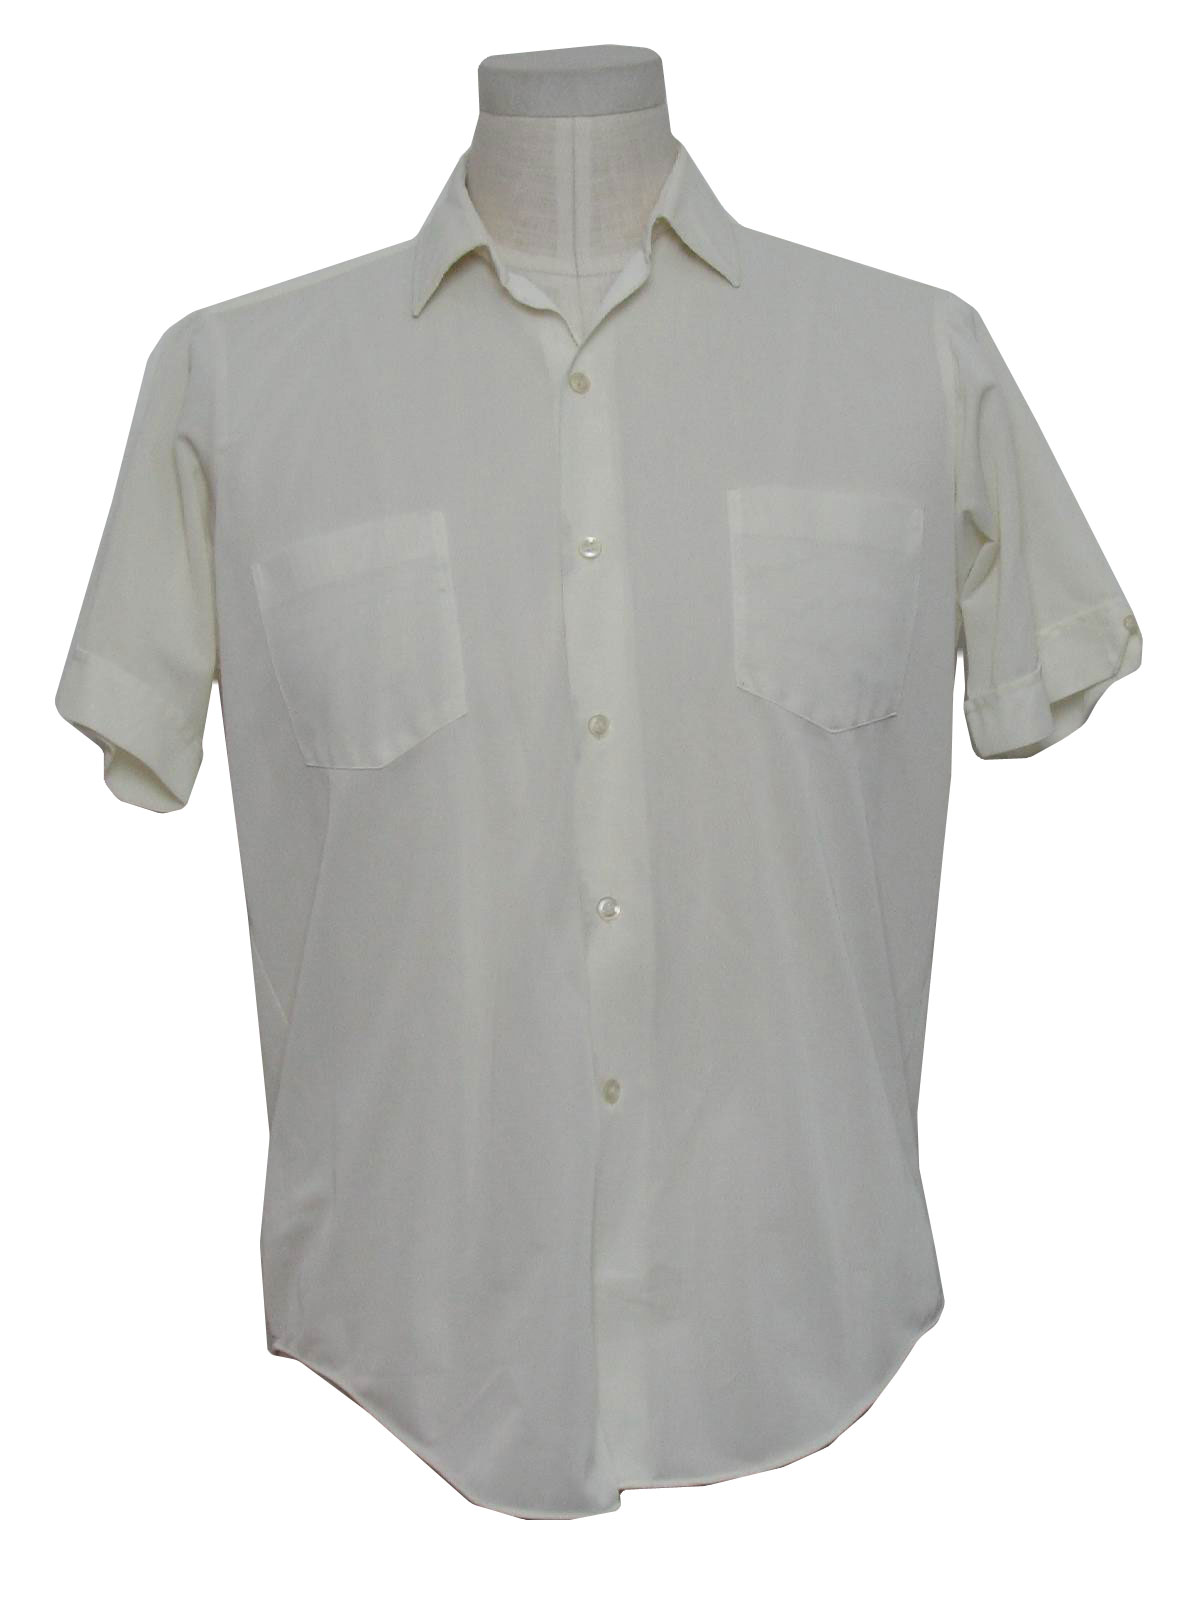 Retro 60s Shirt (Miracle Fiber Tricolene) : Early 60s -Miracle Fiber ...